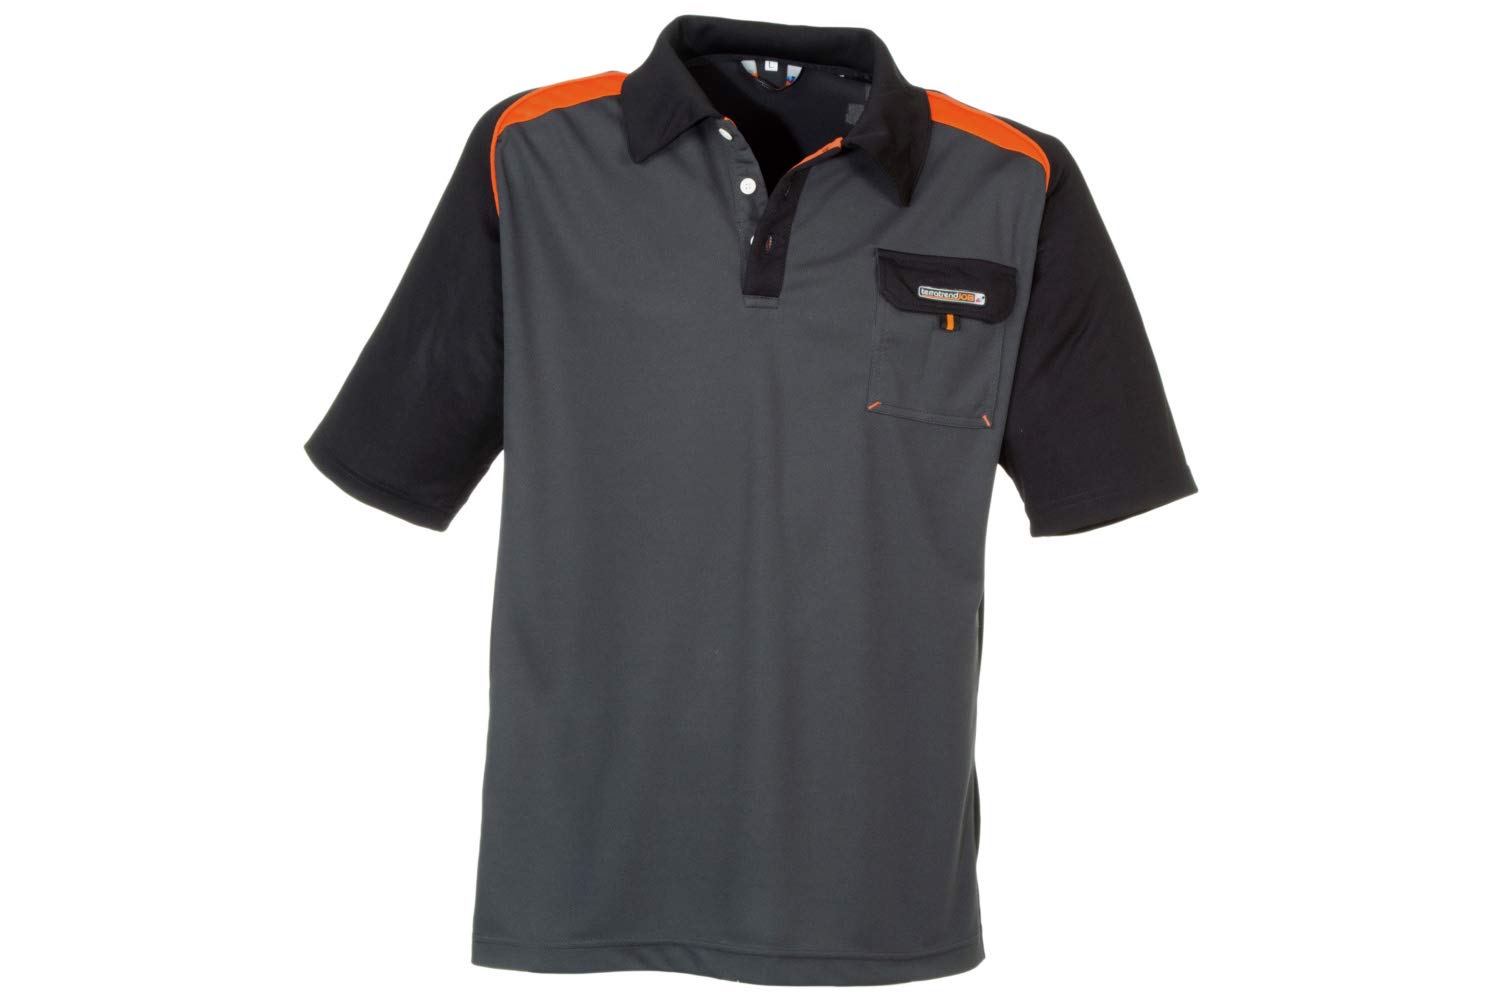 Terratrend JOB Polo-Shirt, Farbe grau/schwarz/orange, Gr��e S